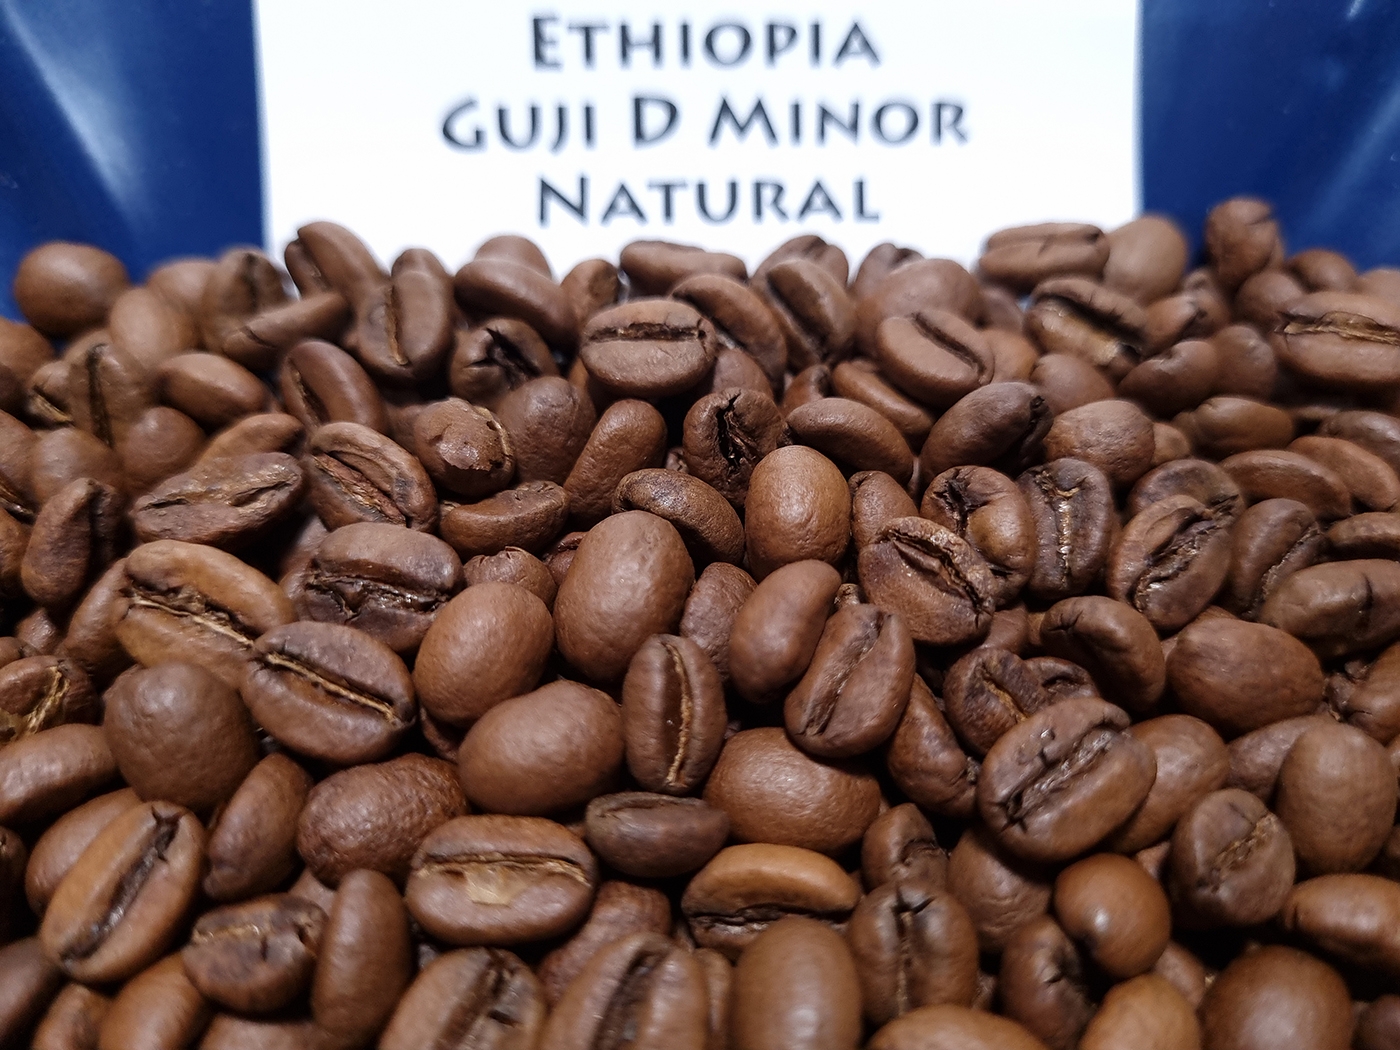 Ethiopia Guji D Minor Natural Beans